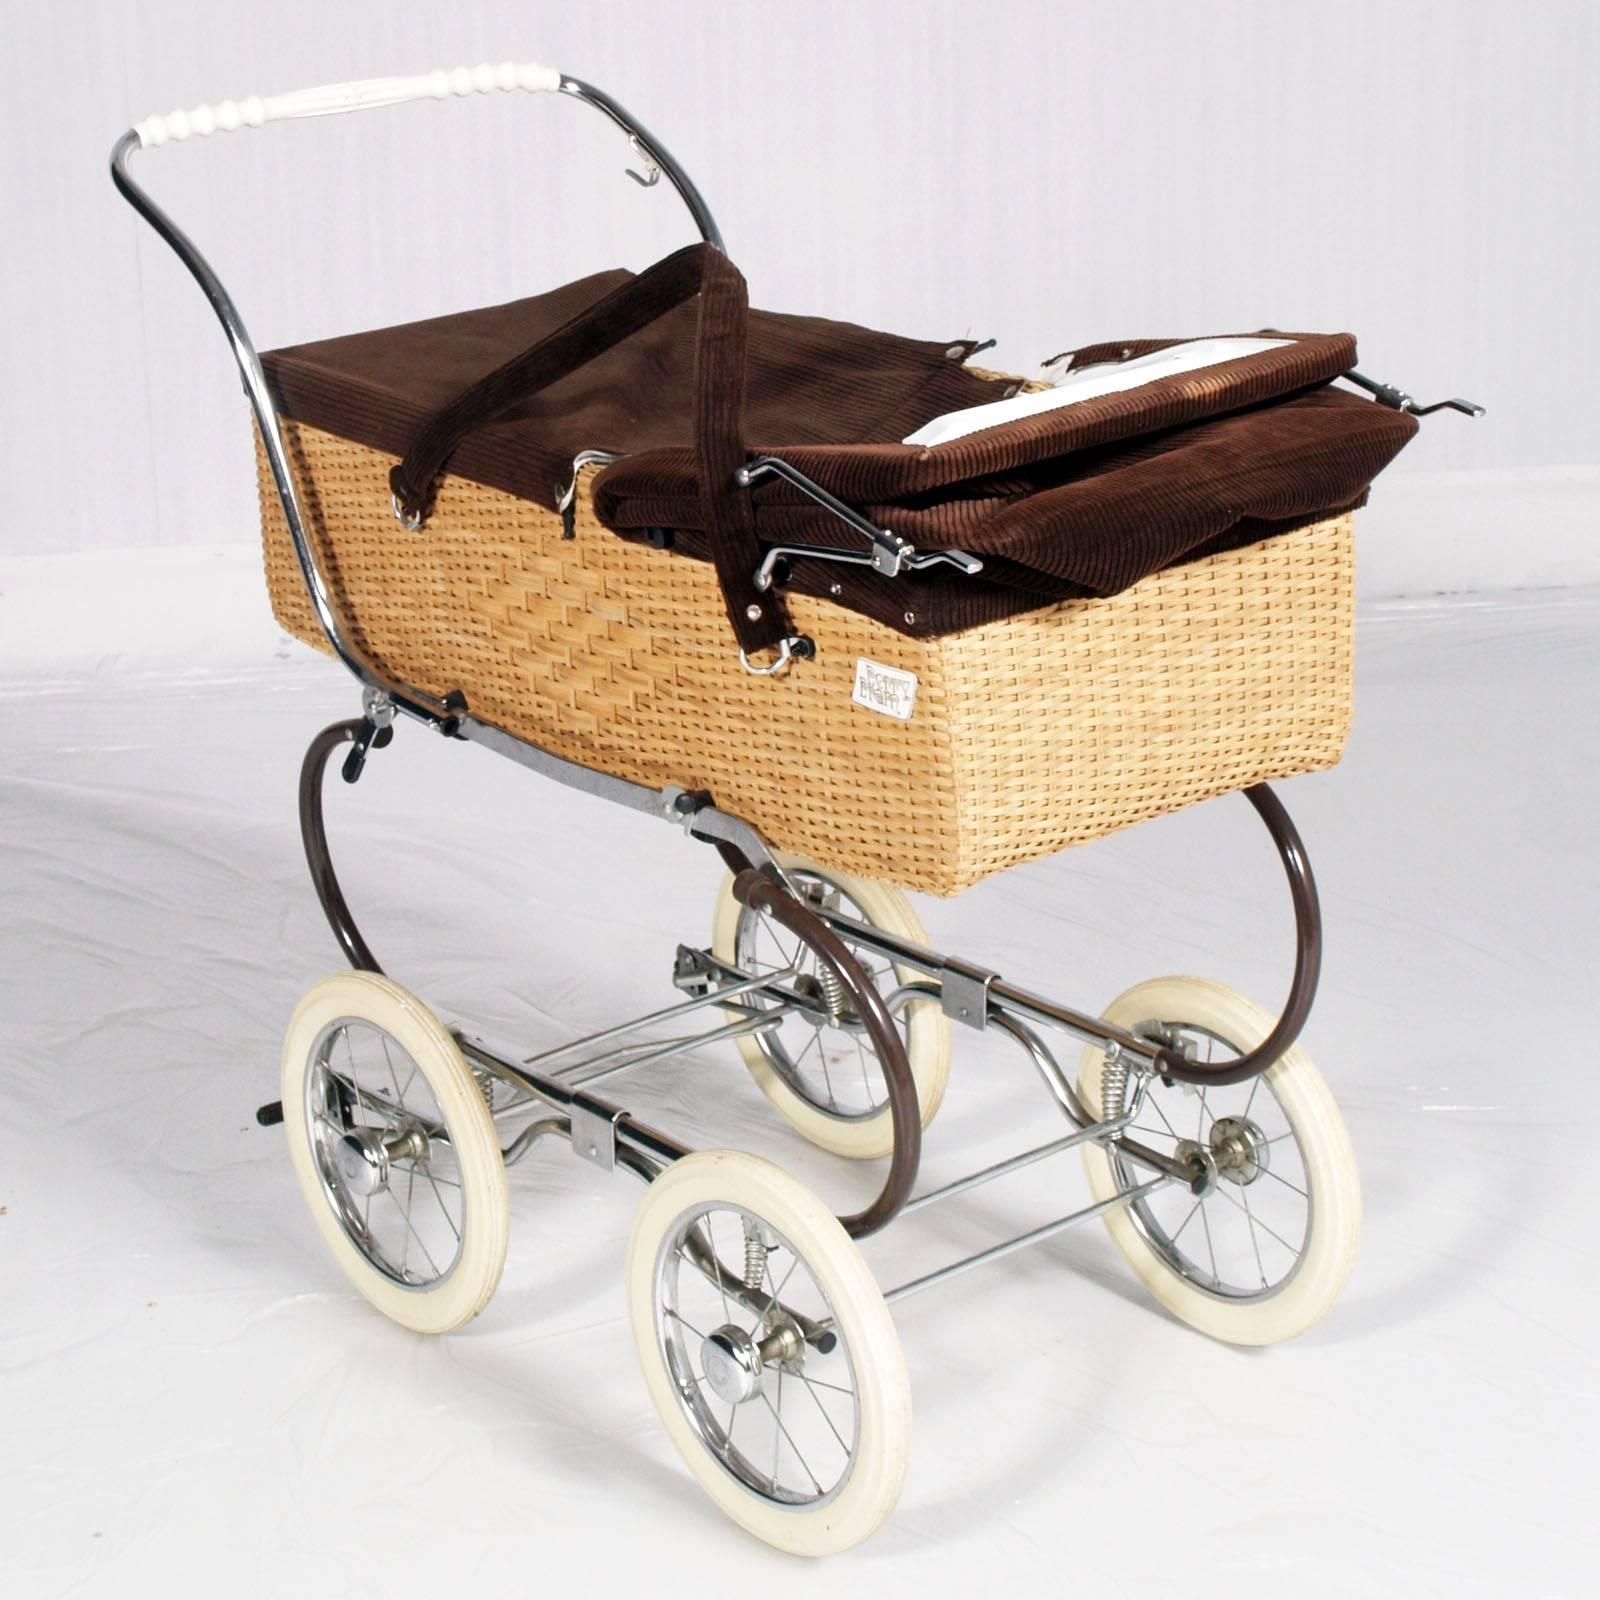 1960s pram baby carriage stroller by Perry Pram steel chromed and wickerwork
Measure cm: H 90/103, W 105, D 50.